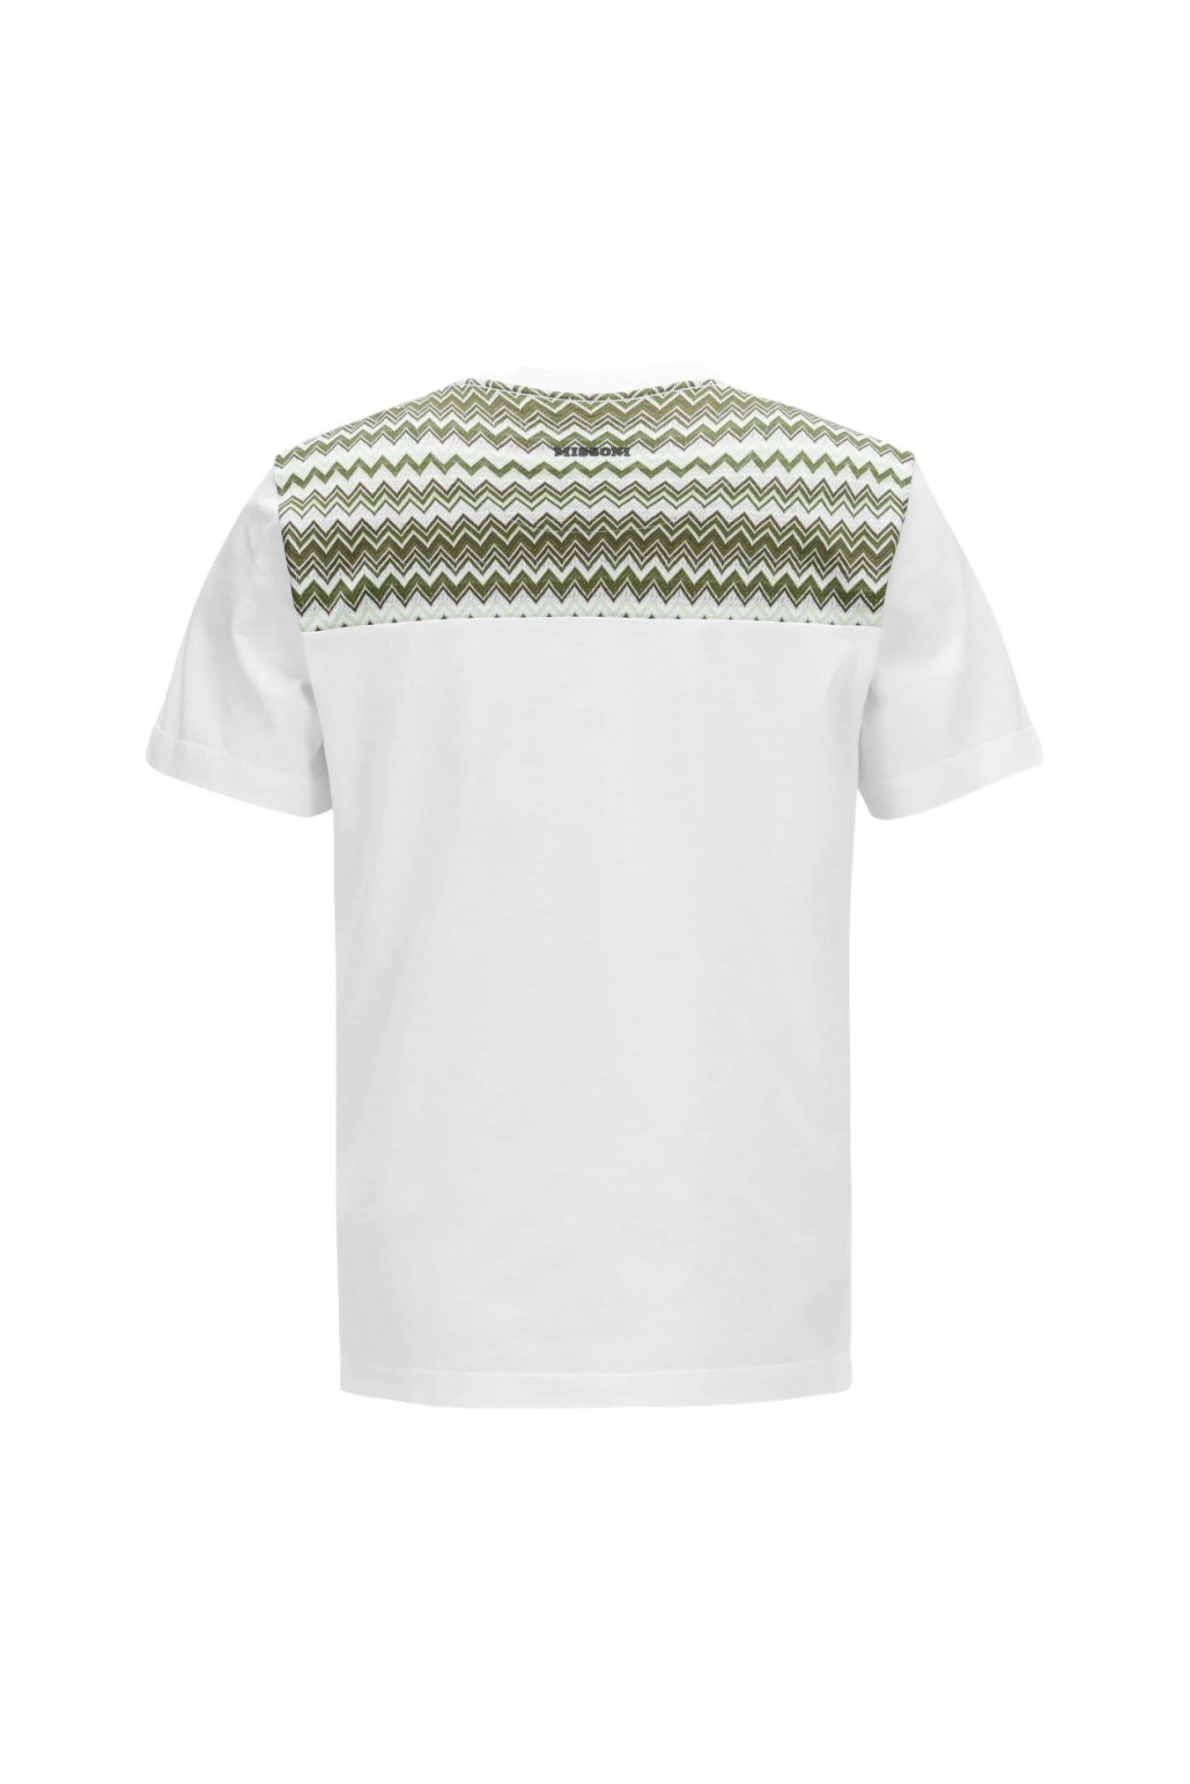 Missoni Men’s Crew-neck T-shirt White/Green - Back View